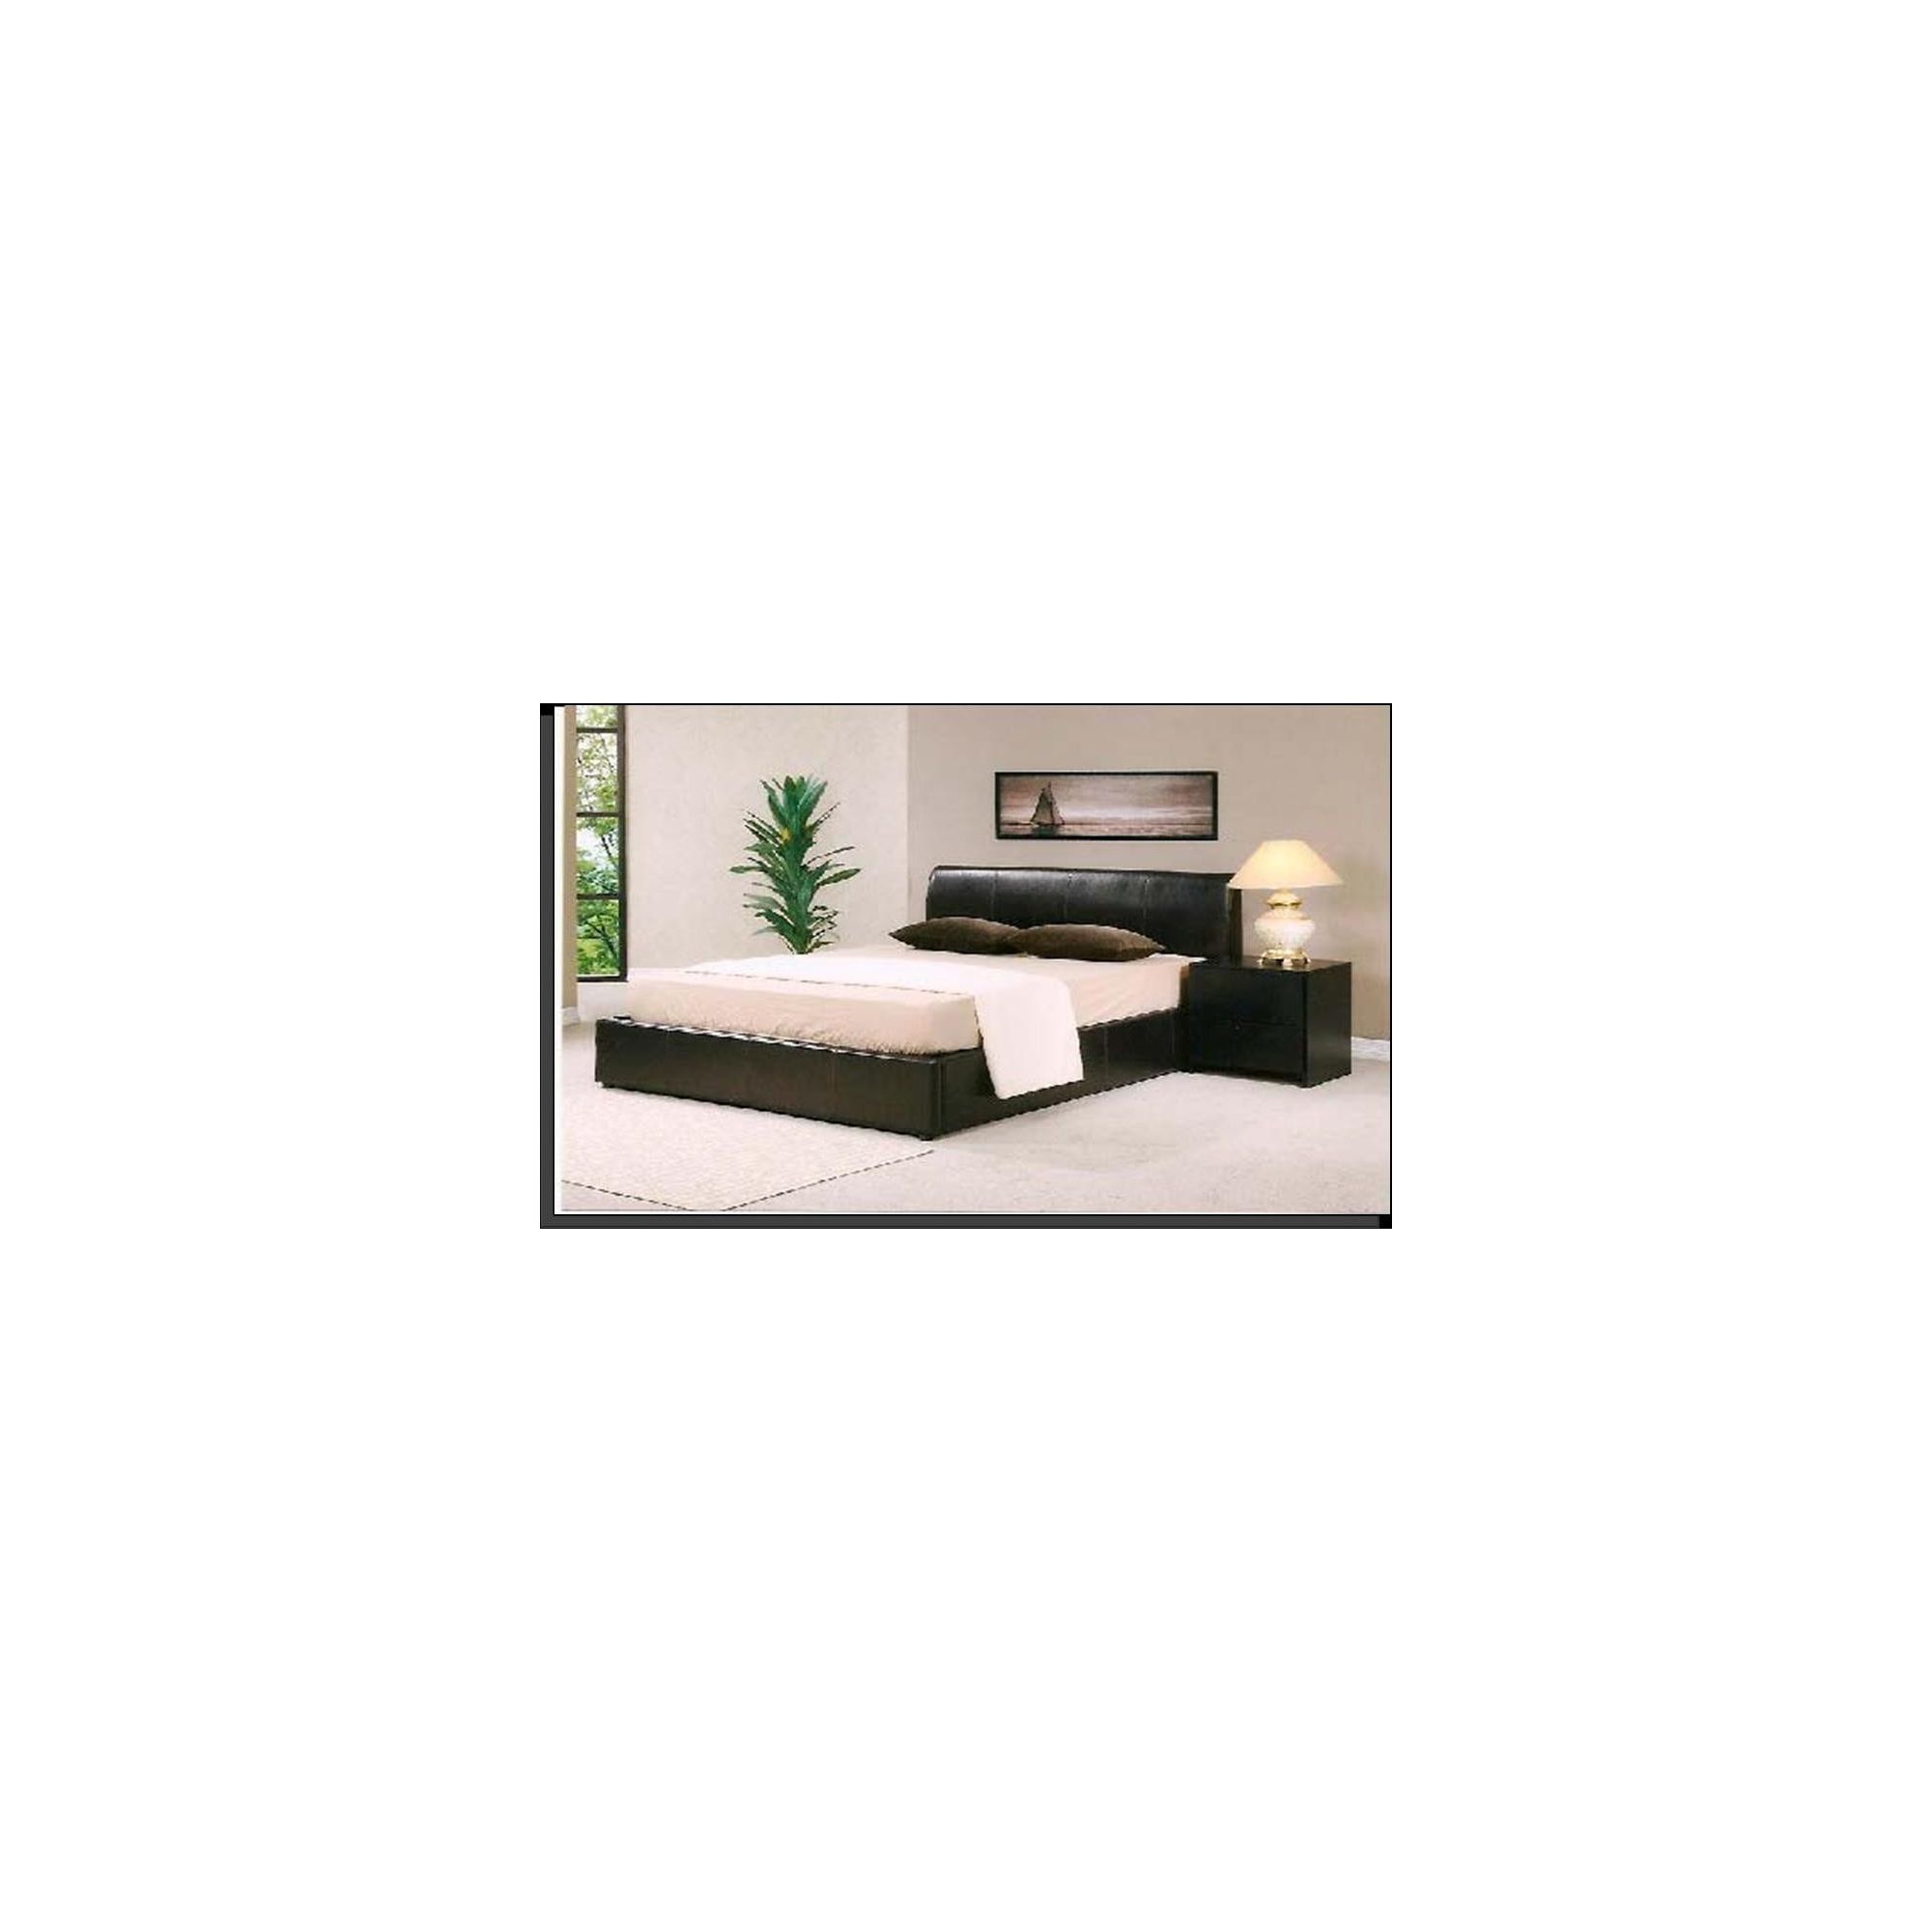 Ideal Furniture Elise Storage Bed - Brown - King at Tesco Direct